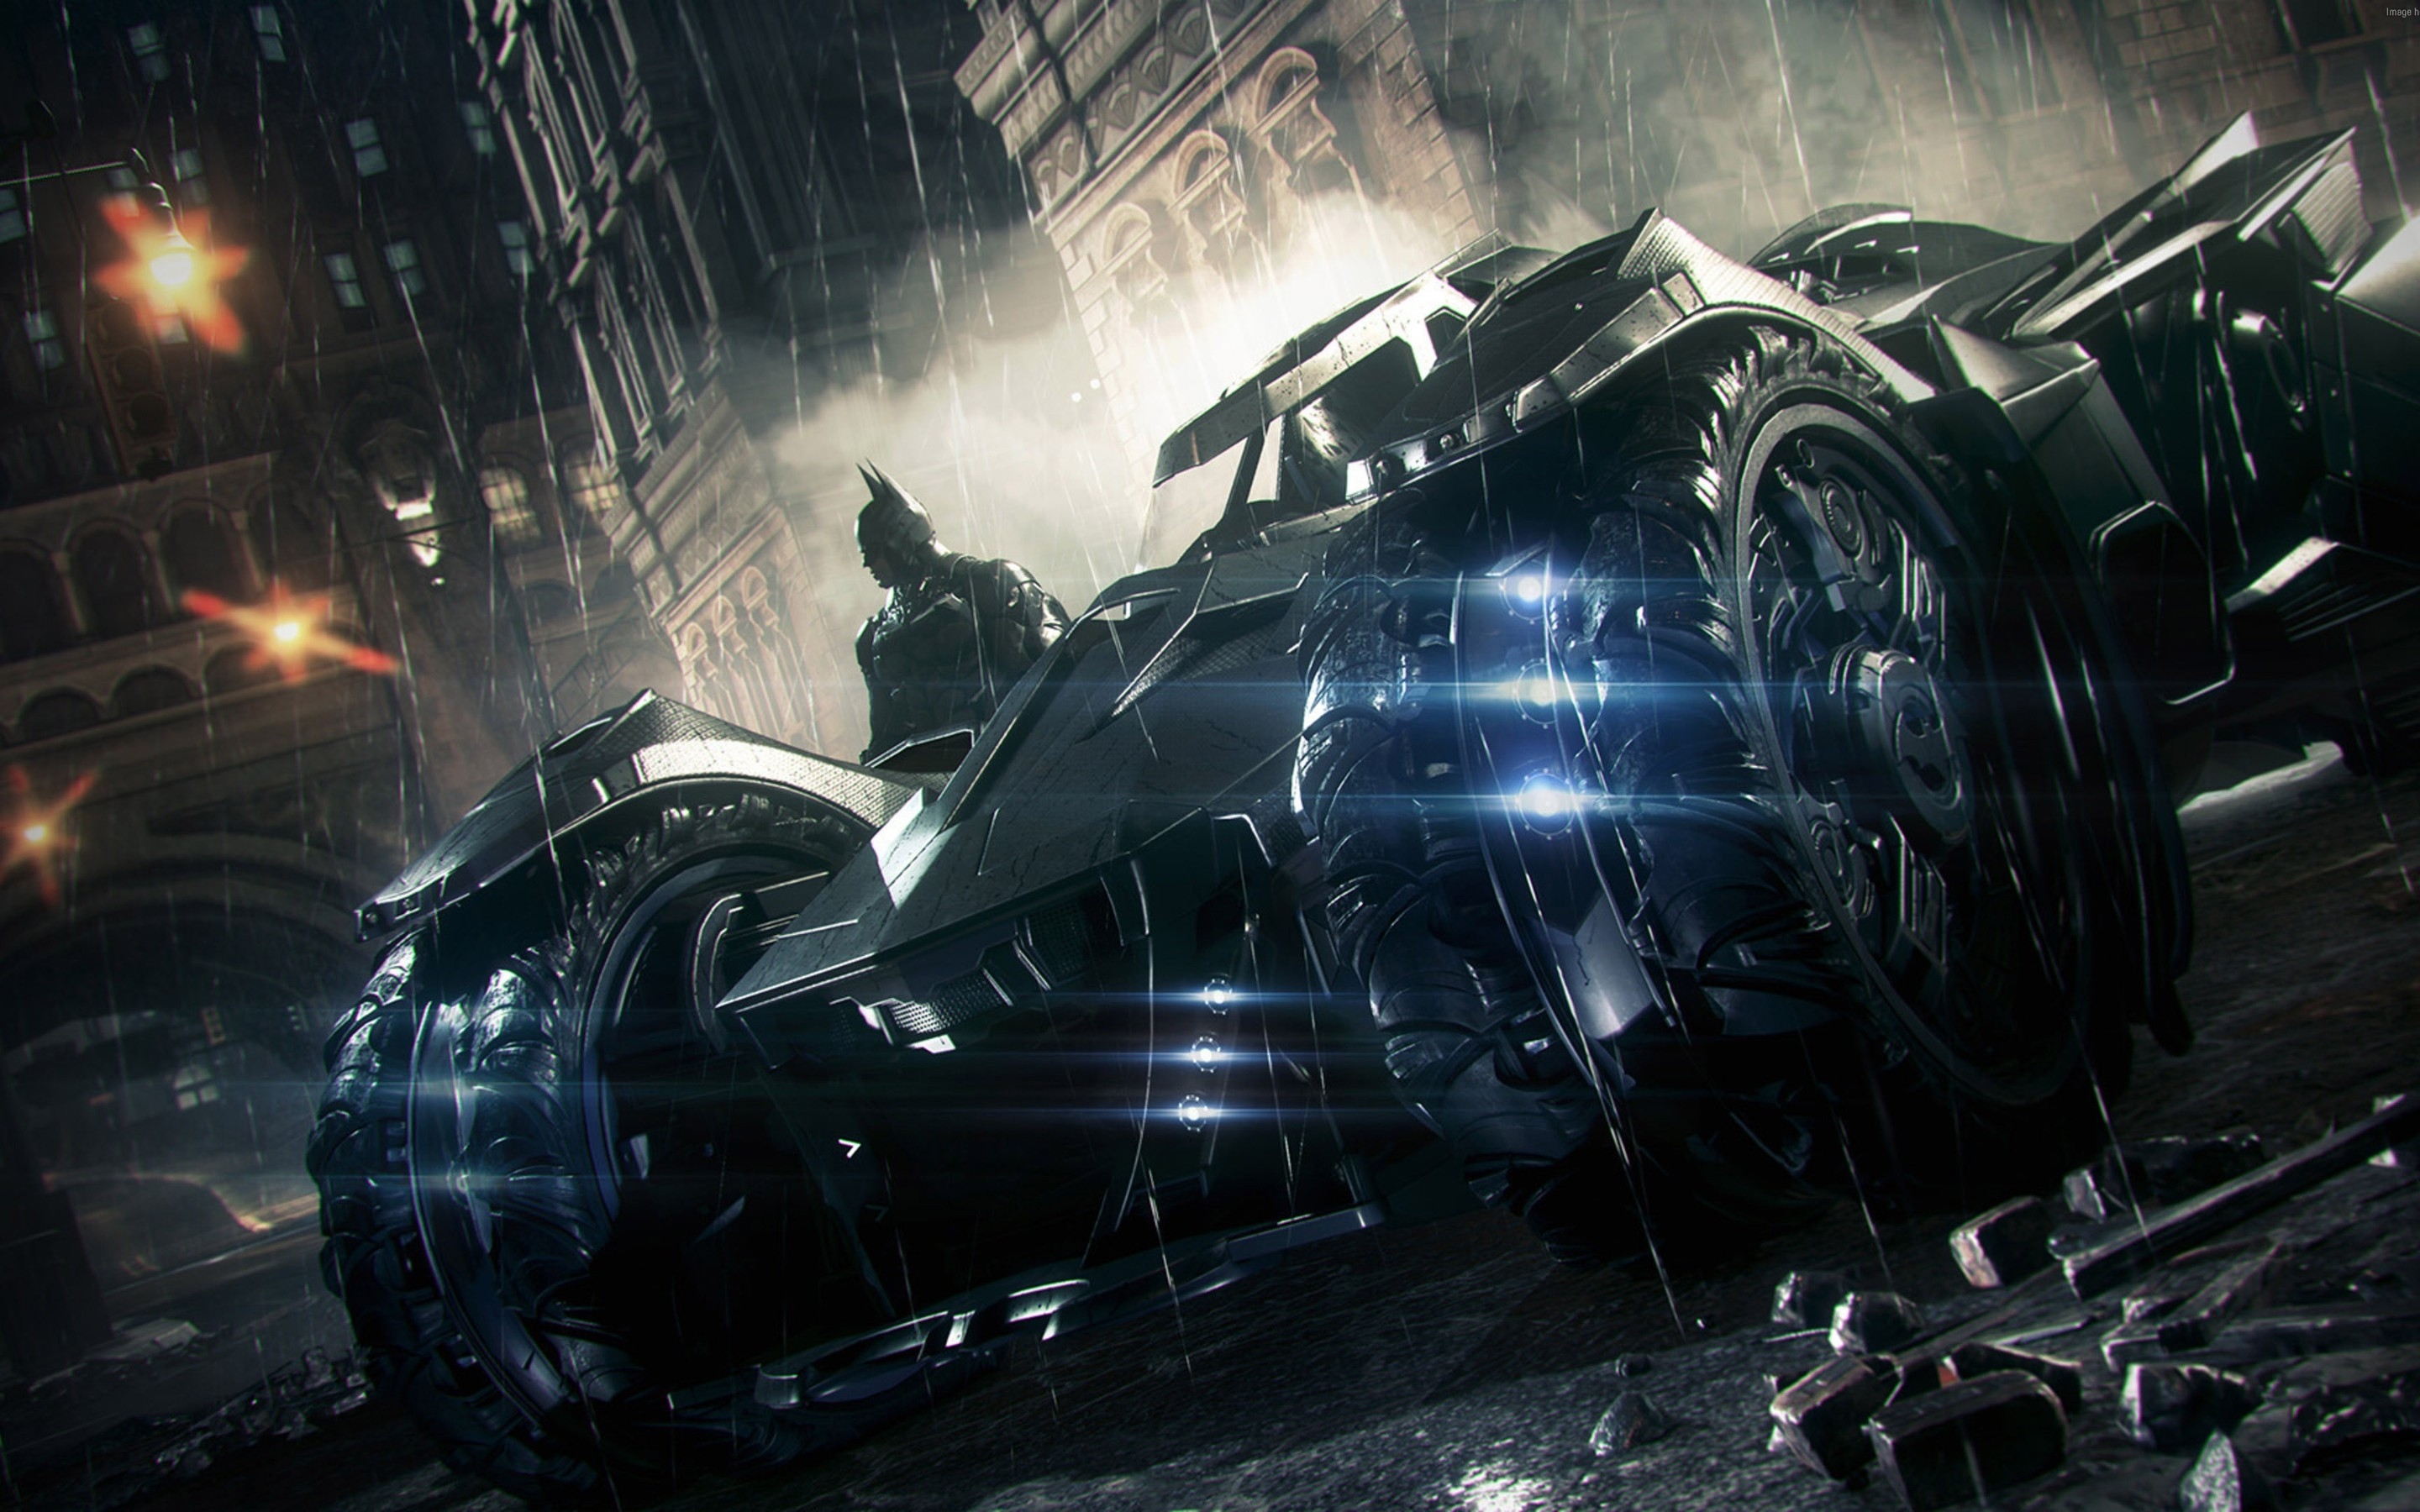 Batman Arkham Knight 3 Car for 2880 x 1800 Retina Display resolution